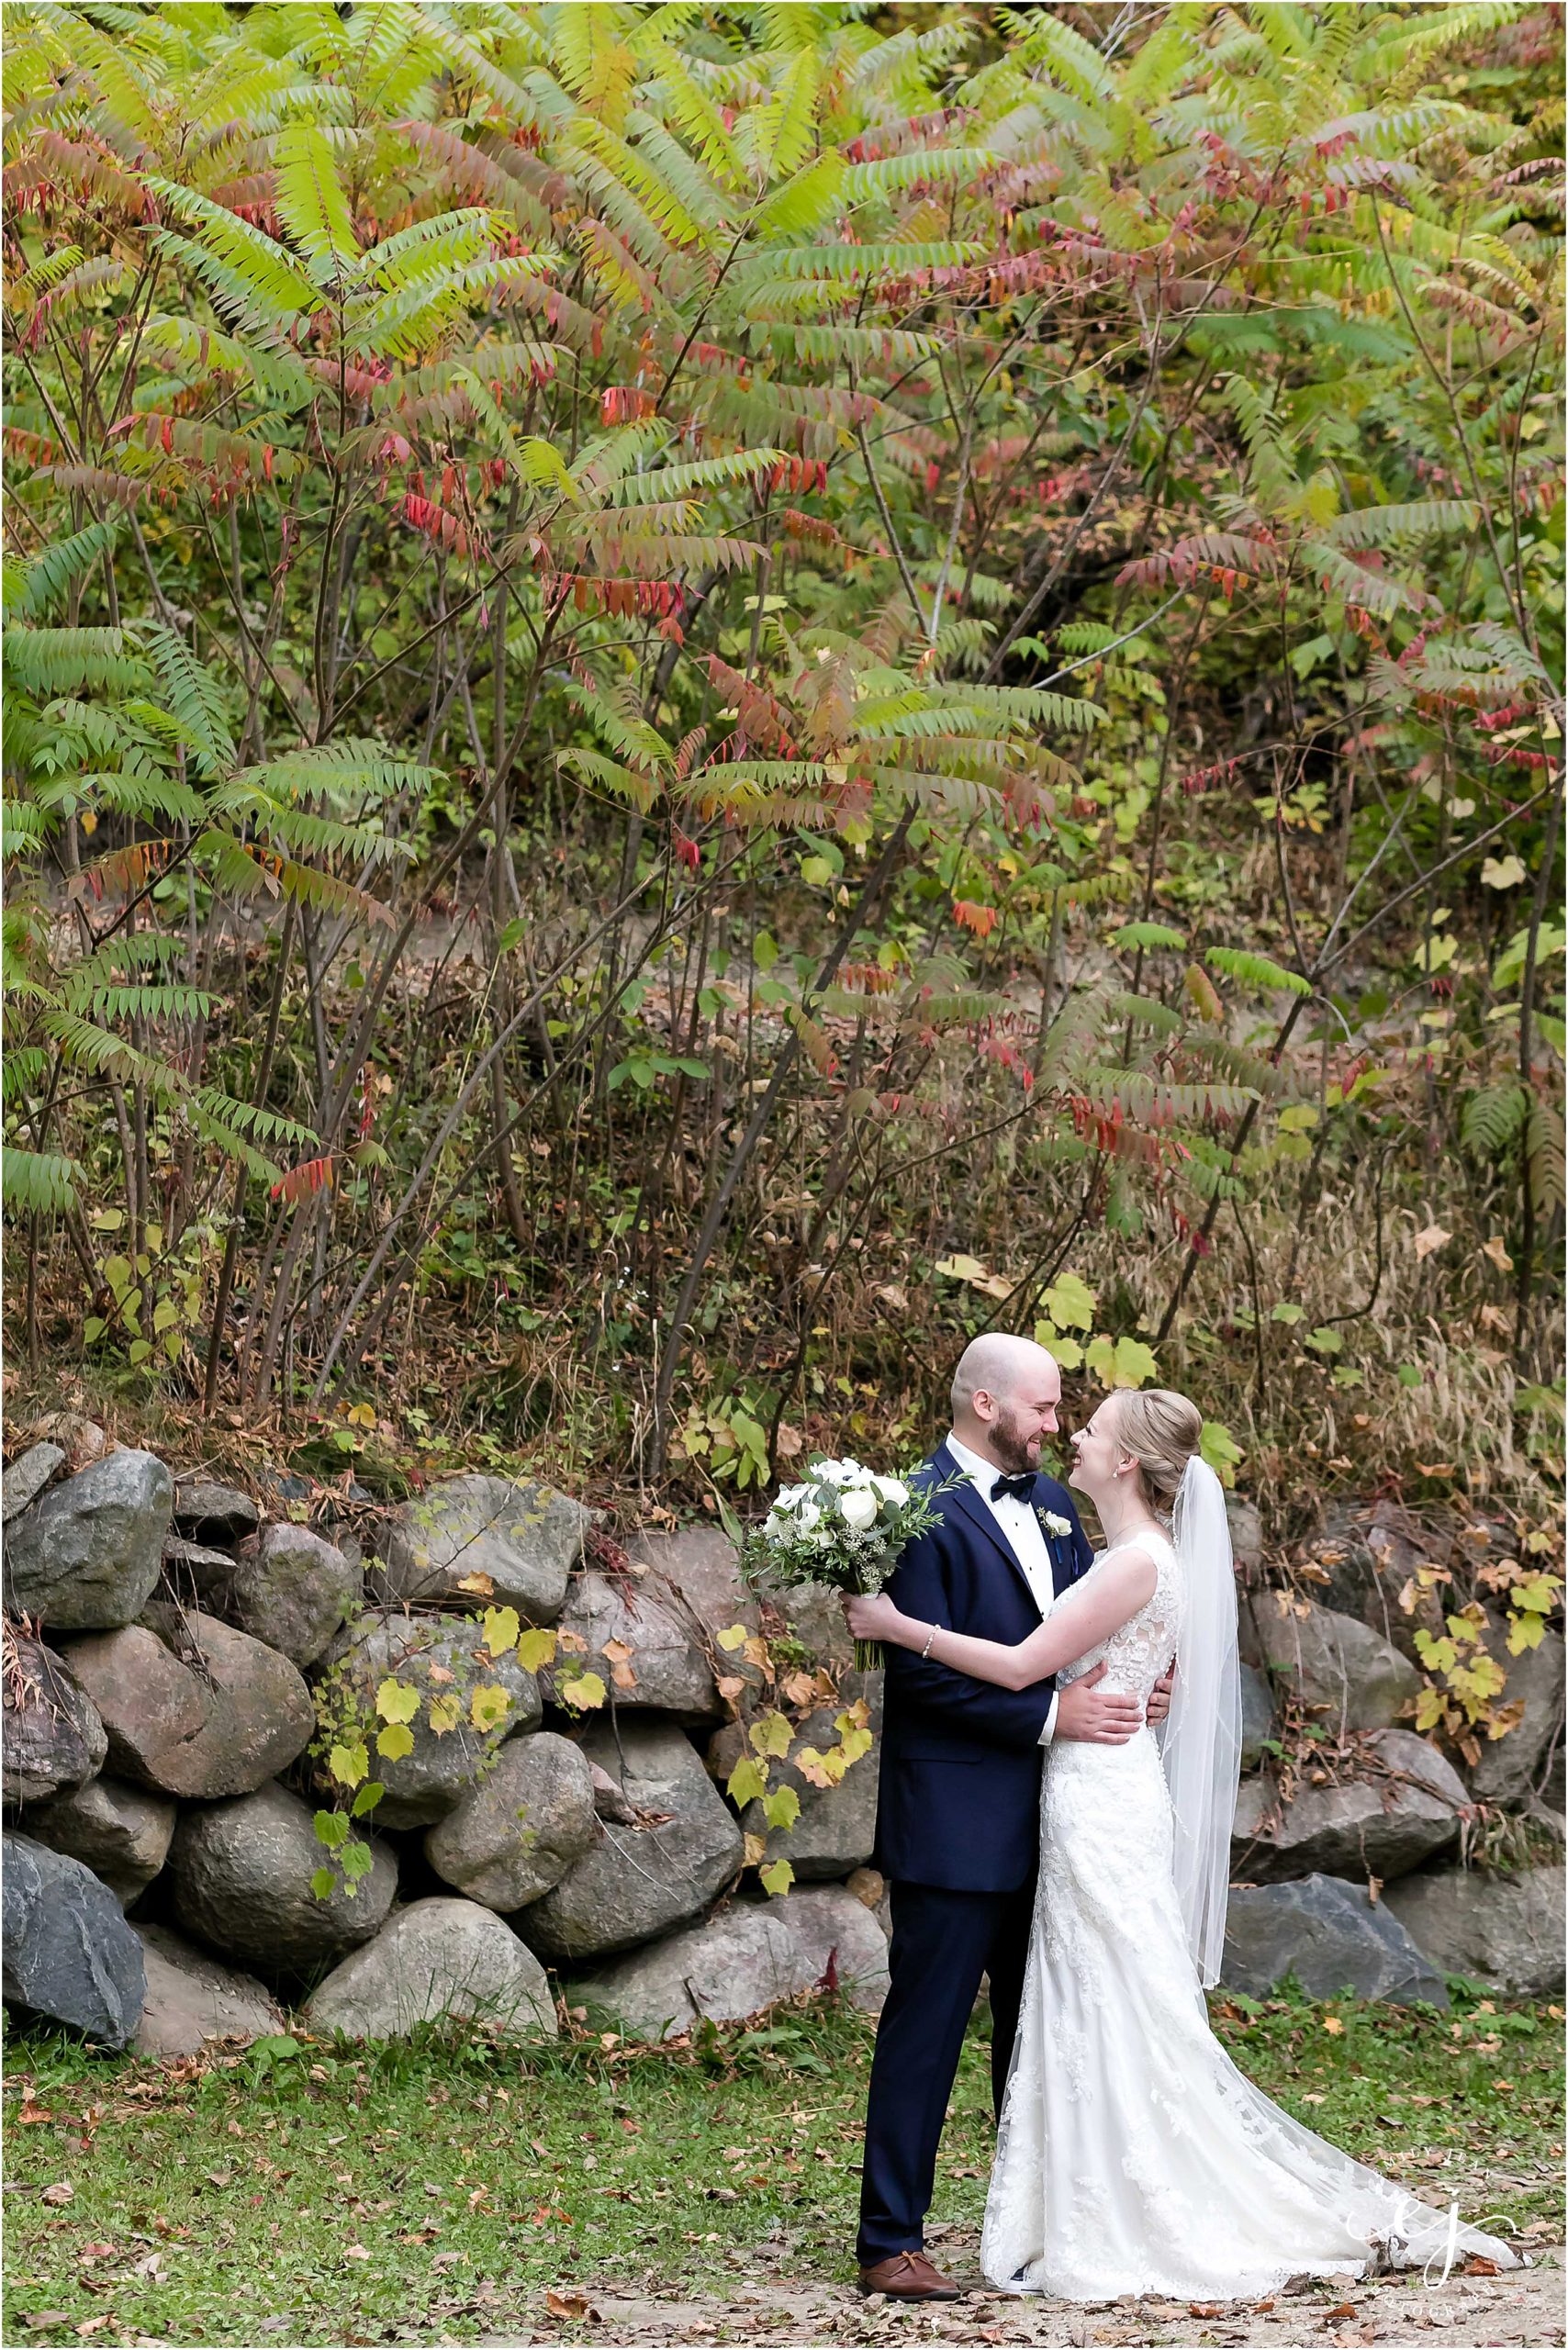 Bride and groom among autumn scenery at Edgewood farm in Minnesota